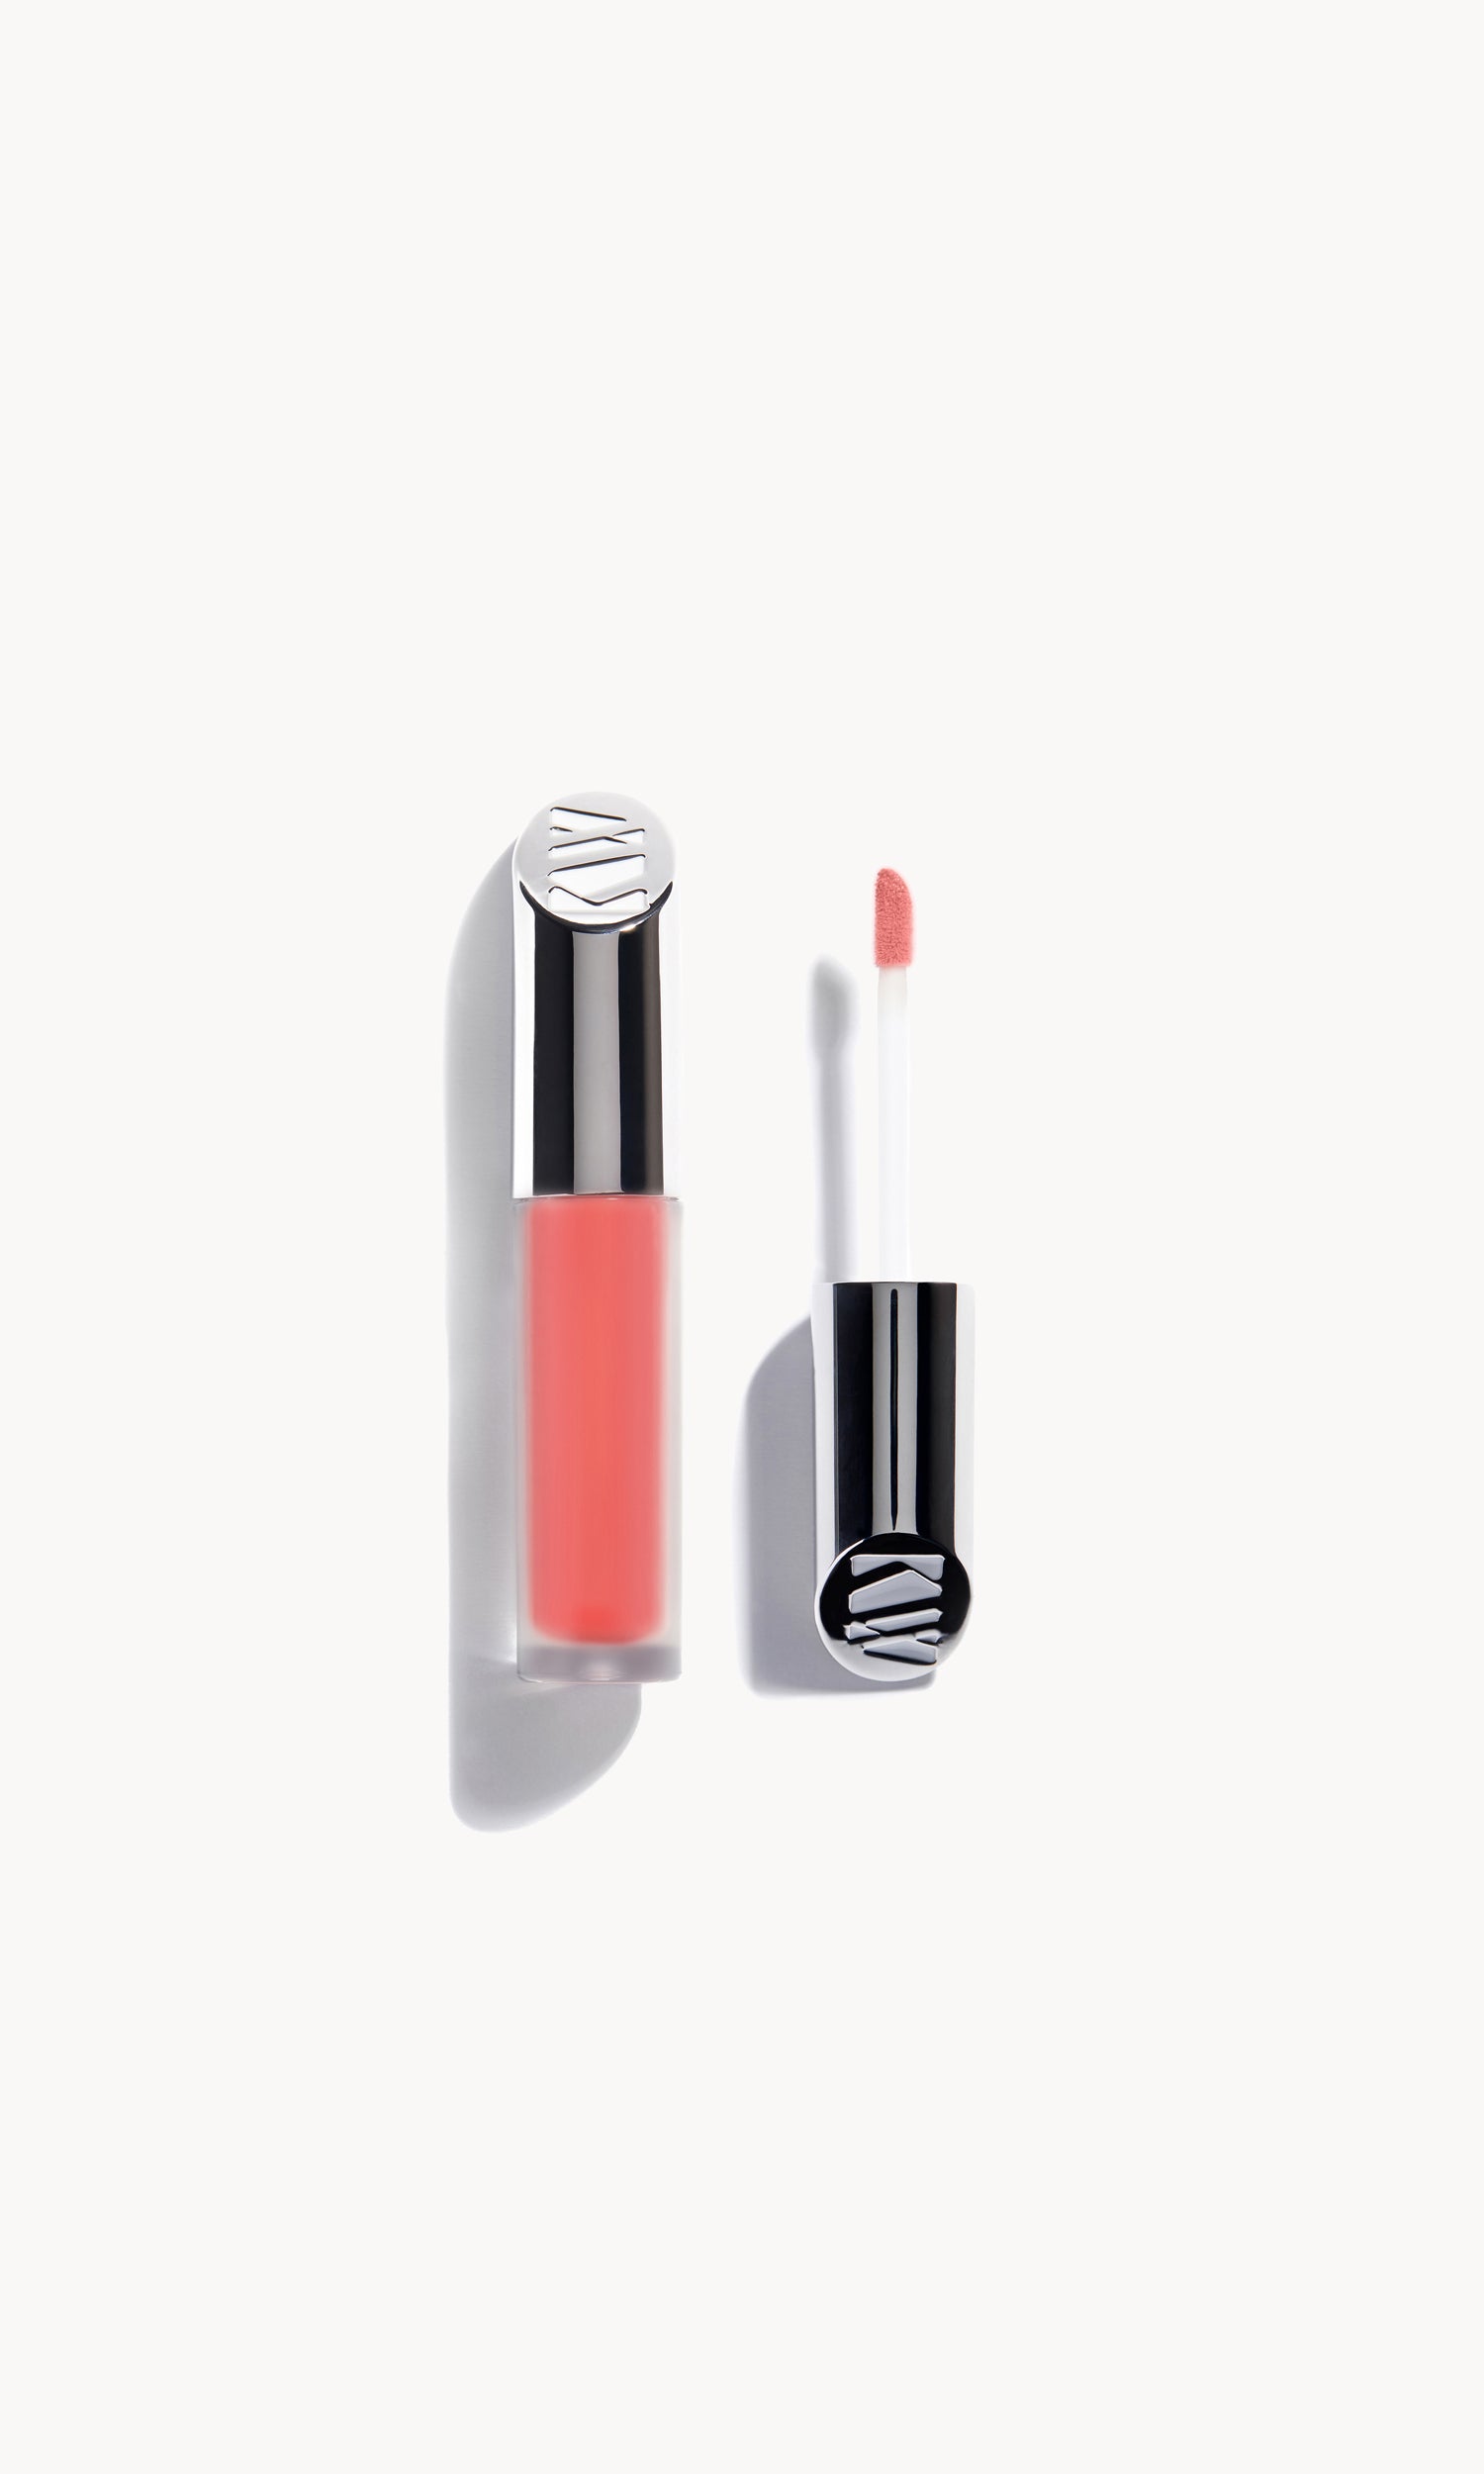 Stellar Shine Makeup Set: High-Shine Lipstick